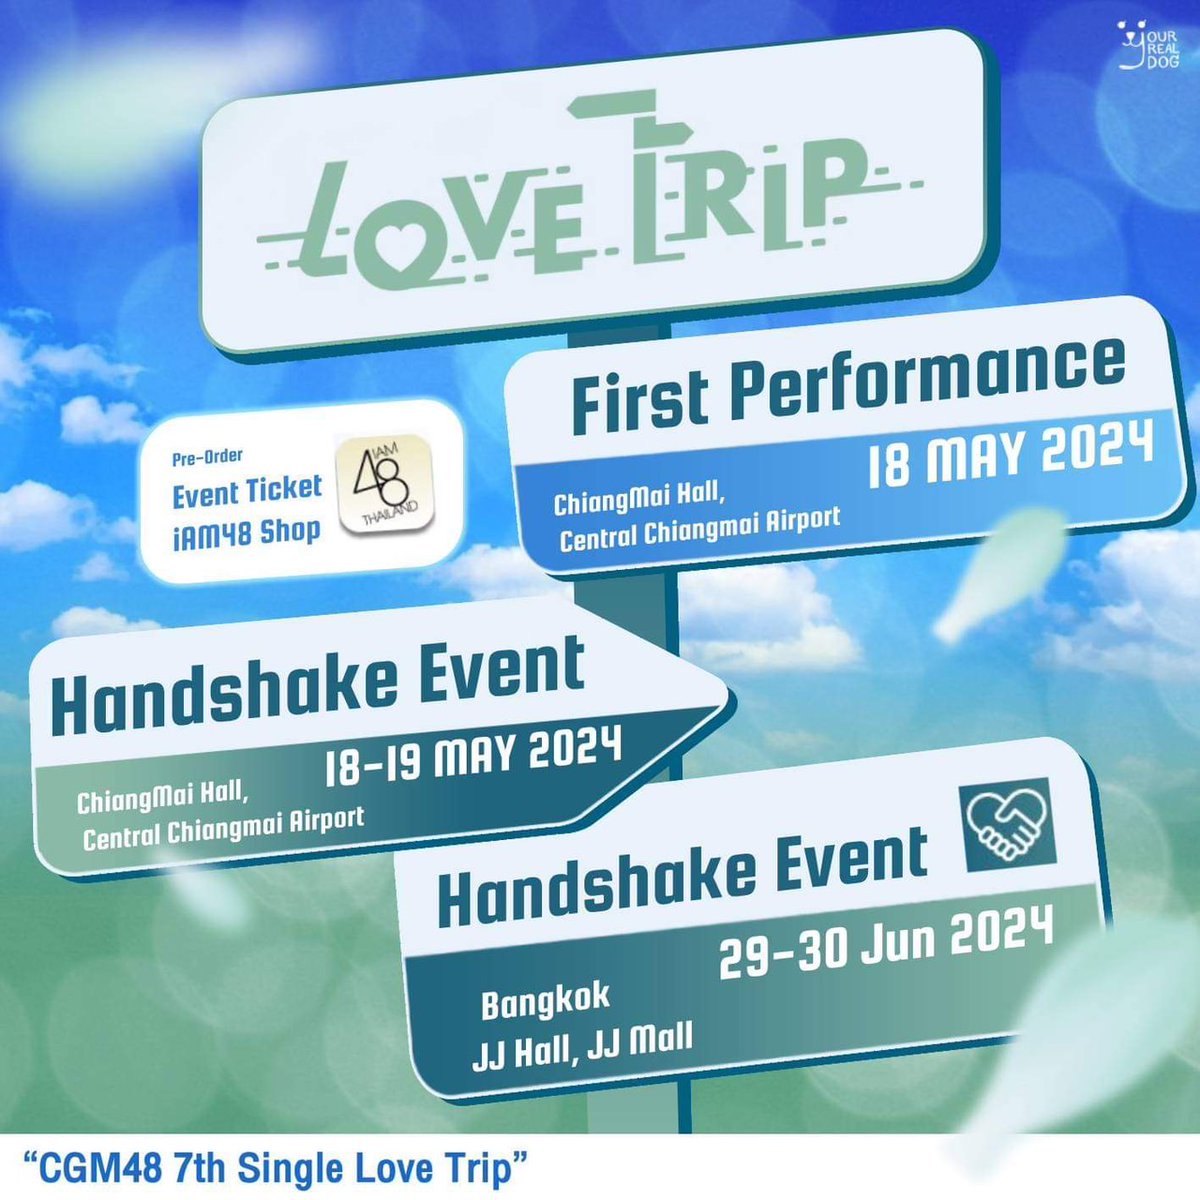 [💗🚏]  #LoveTripTH 🚎🫰🏻☁️
    #NanaCGM48 #CGM48

      ✦ 𝗦𝗖𝗛𝗘𝗗𝗨𝗟𝗘 ✦
𝗖𝗚𝗠𝟰𝟴 𝟳𝘁𝗵 𝗦𝗶𝗻𝗴𝗹𝗲 '𝙇𝙤𝙫𝙚 𝙏𝙧𝙞𝙥’

💗  𝐅𝐢𝐫𝐬𝐭 𝐏𝐞𝐫𝐟𝐨𝐫𝐦𝐚𝐧𝐜𝐞 🚏
📆 18 MAY 2024 
📍Chiang Mai Hall, Central Chiangmai Airport
🕰️ TBA

💗 𝐇𝐚𝐧𝐝𝐬𝐡𝐚𝐤𝐞 𝐄𝐯𝐞𝐧𝐭 🚏
📆…